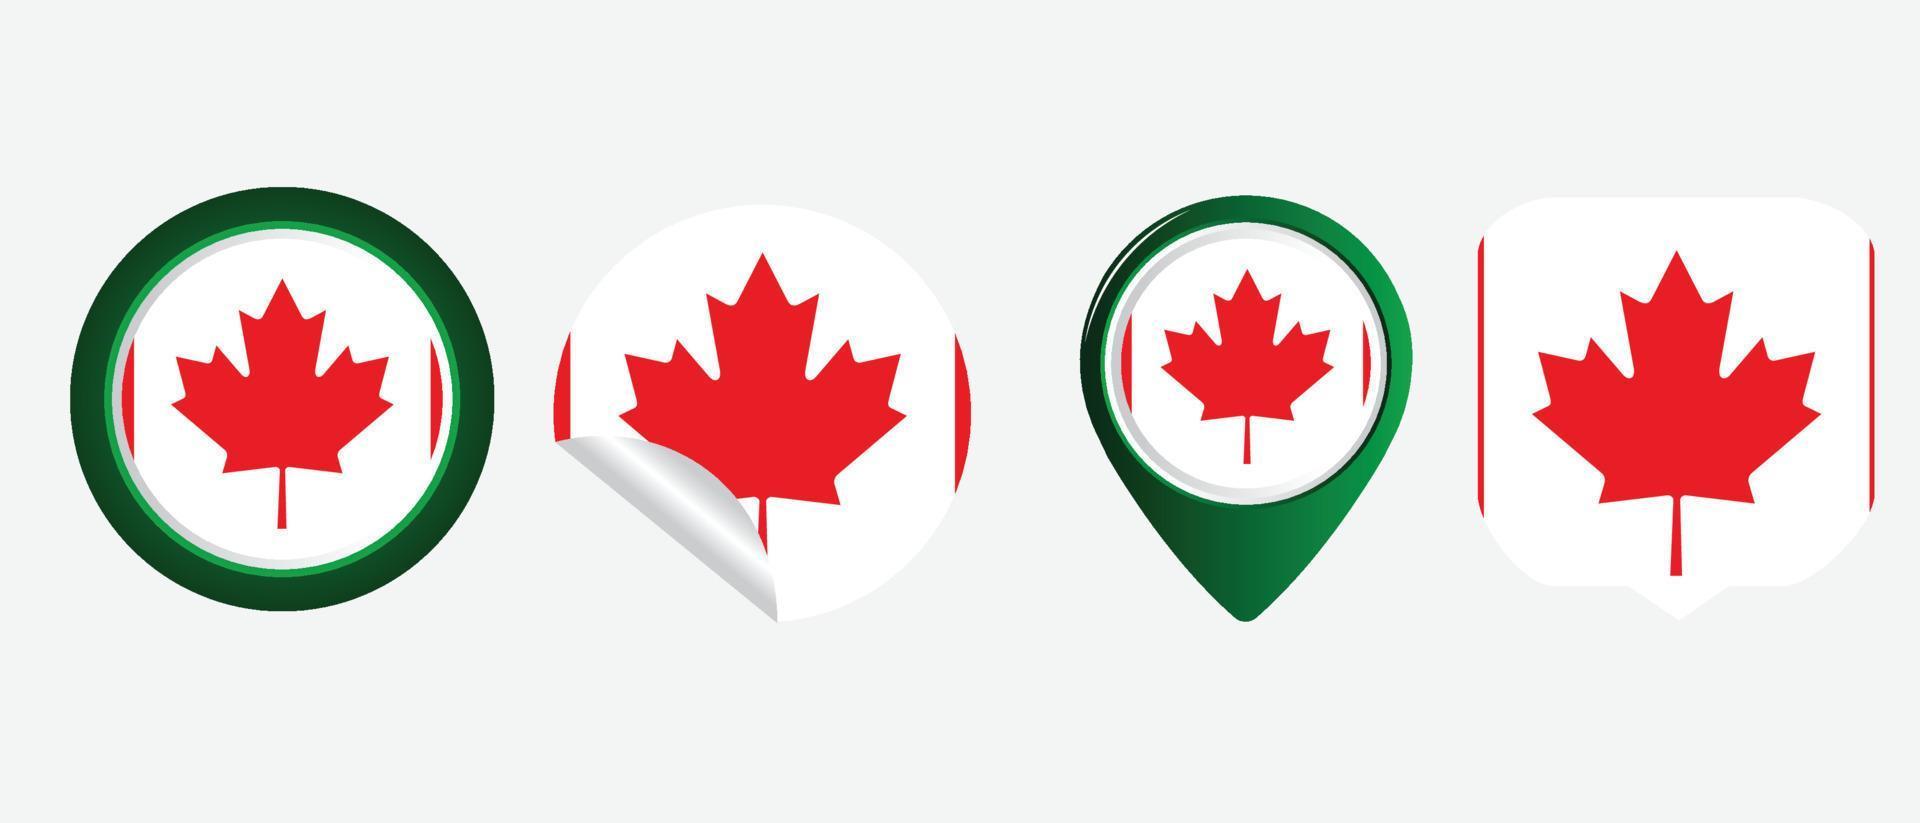 Canadese vlag. platte pictogram symbool vectorillustratie vector